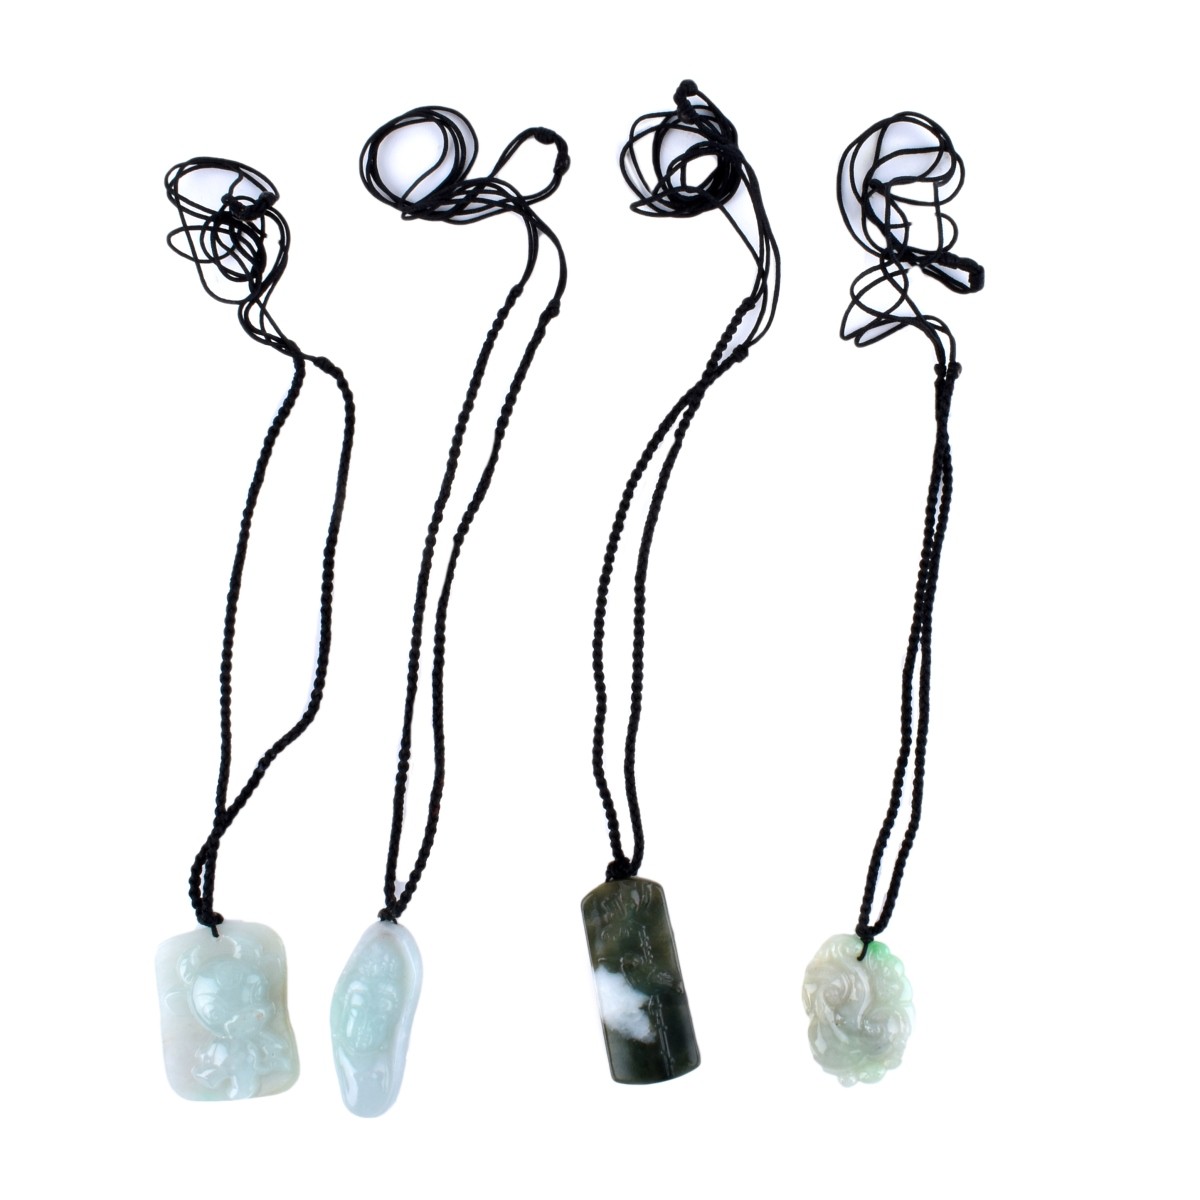 Four Hardstone Pendant Necklaces